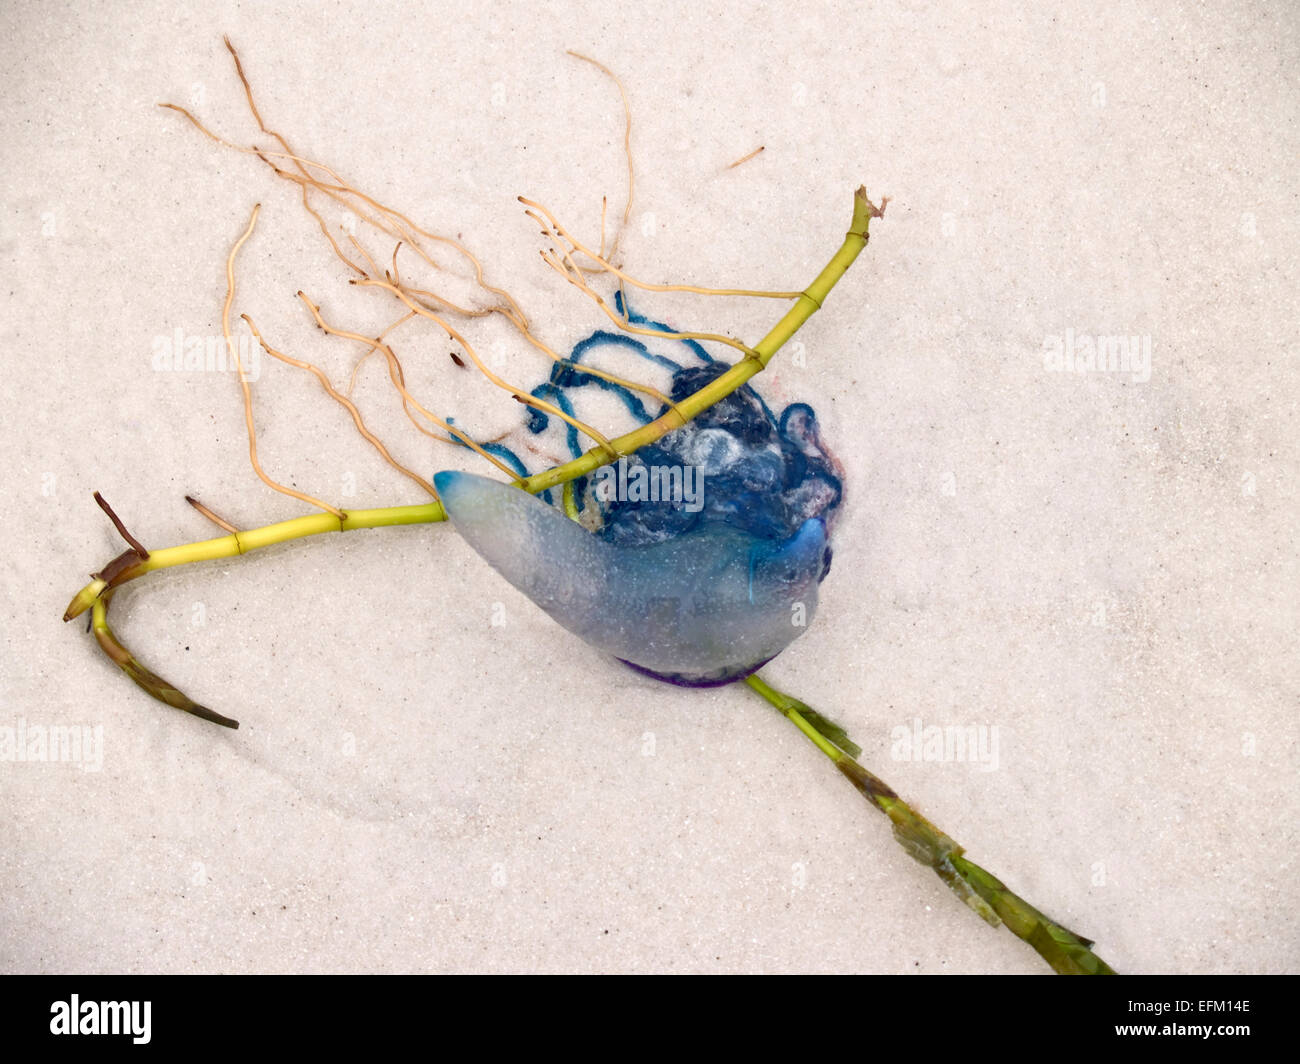 Uomo portoghese o' guerra (Physalia physalis) o Bluebottle meduse e alghe marine sulla spiaggia Foto Stock